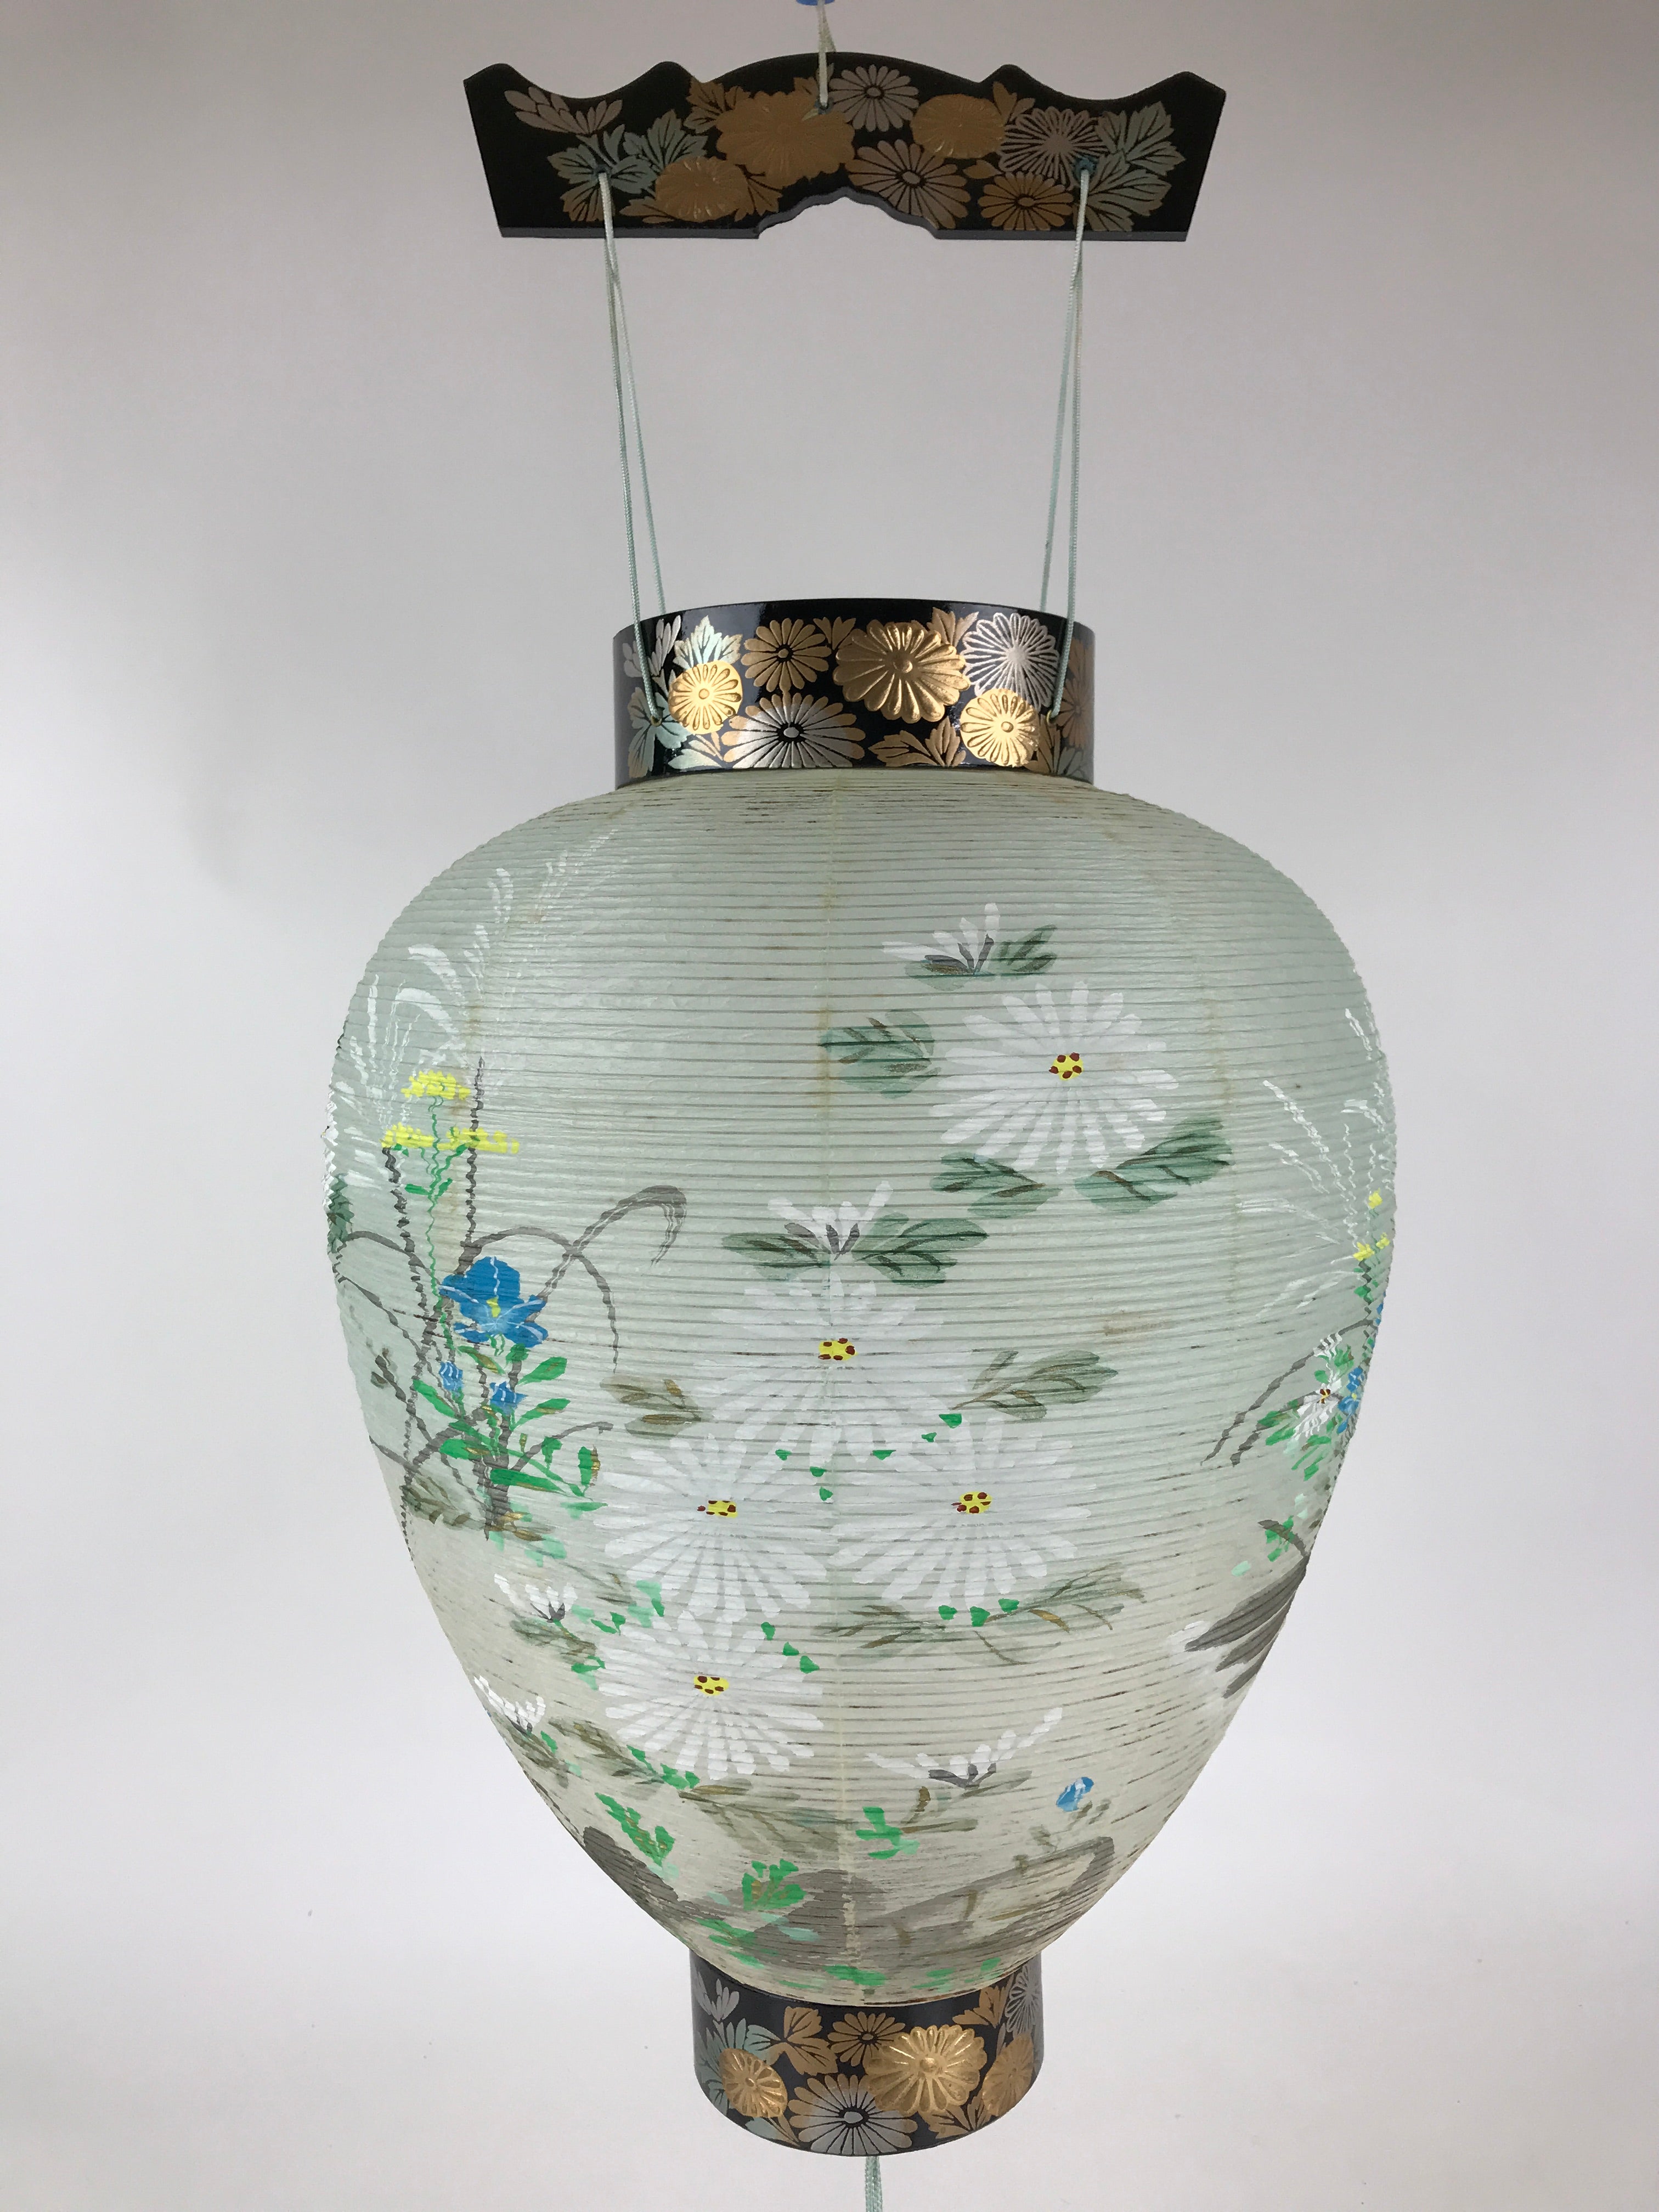 Japanese Hanging Paper Lantern Vtg Chochin Obon Festival Washi Wood Frame LT60